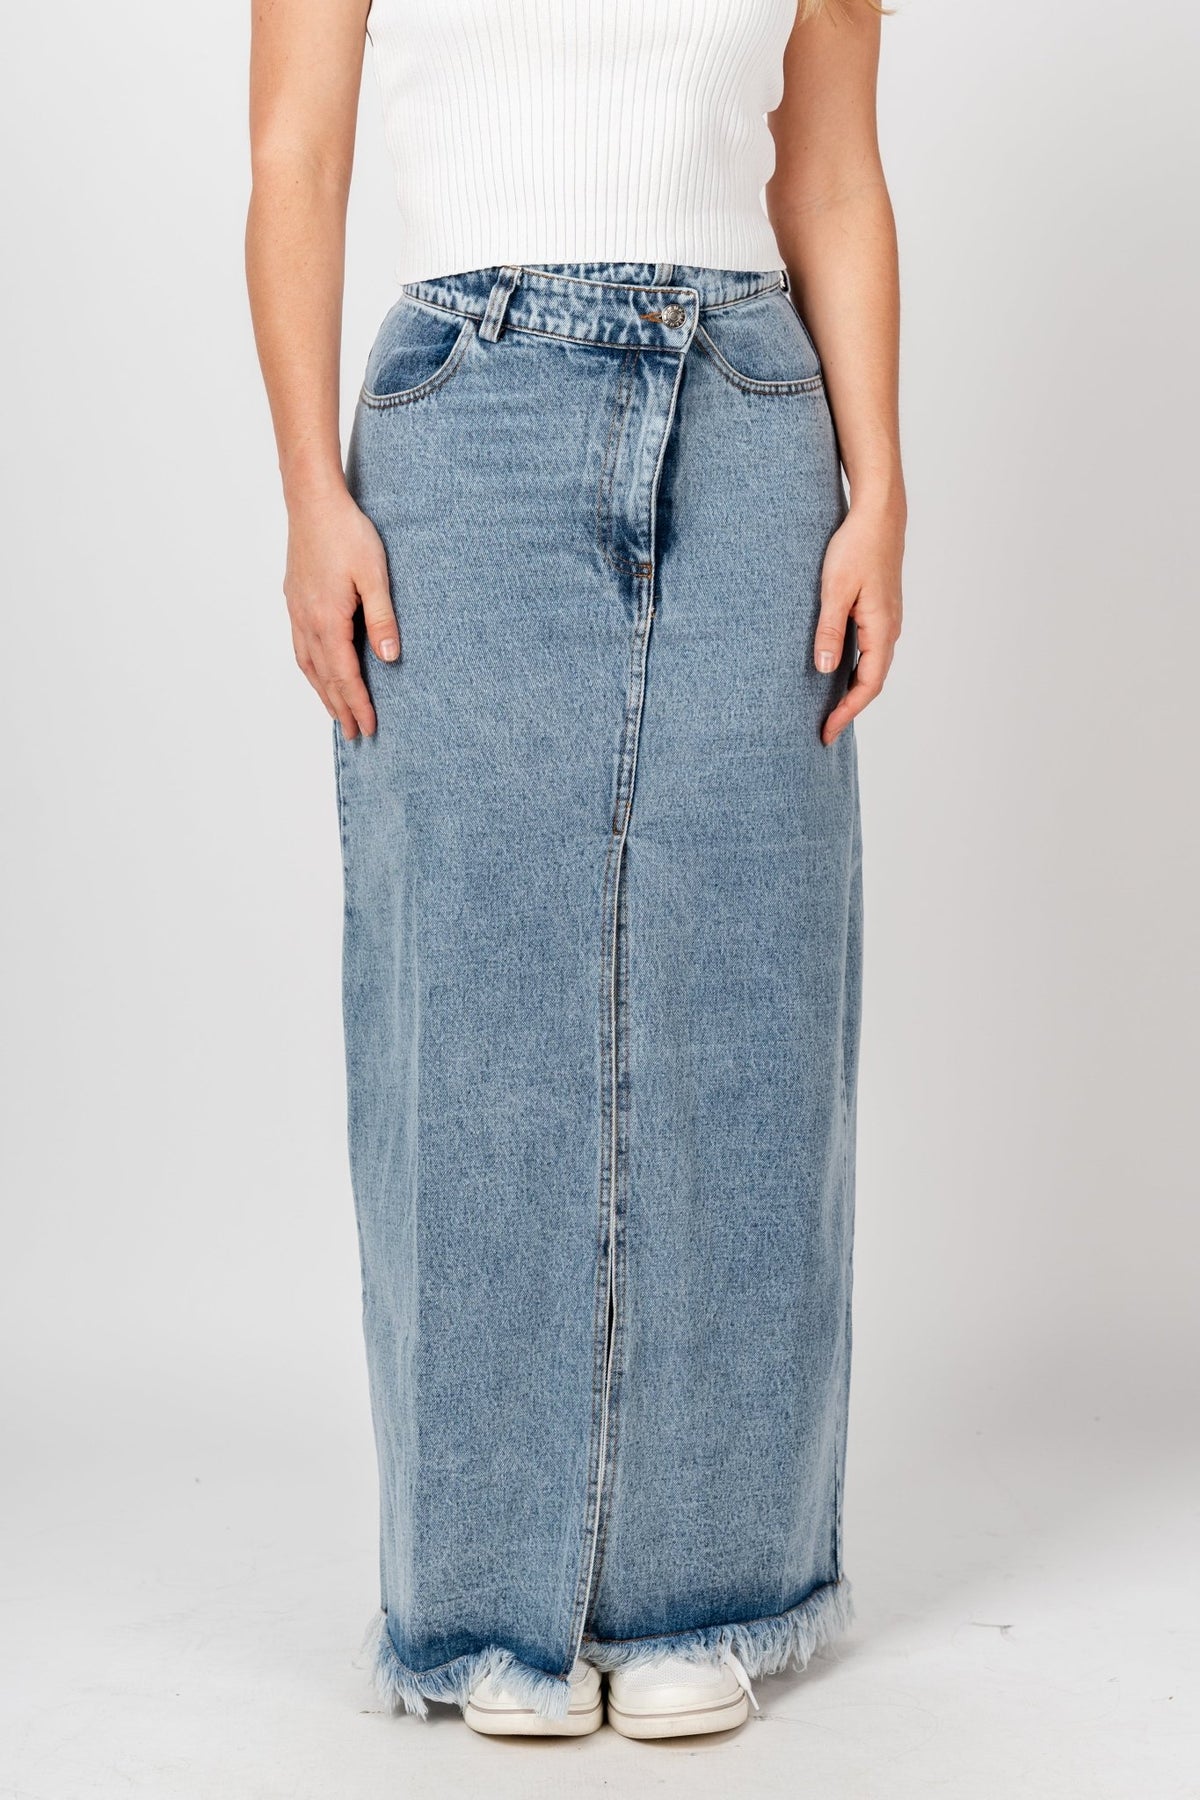 High waist denim maxi skirt denim - Trendy Skirt - Cute American Summer Collection at Lush Fashion Lounge Boutique in Oklahoma City